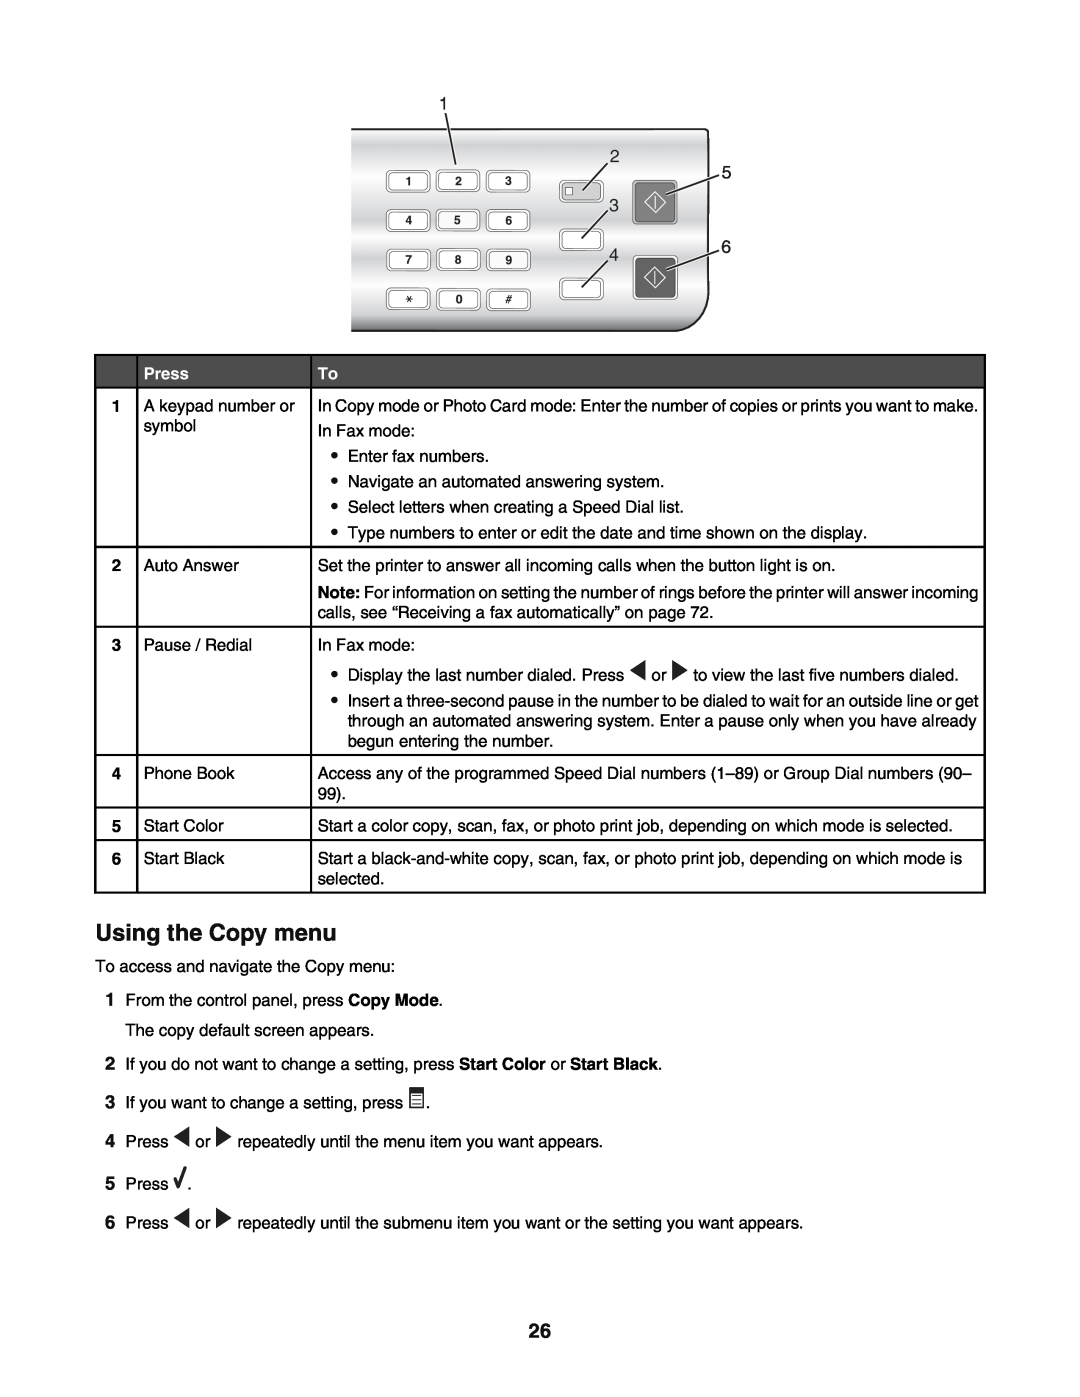 Lexmark 5400 manual Using the Copy menu, Press 